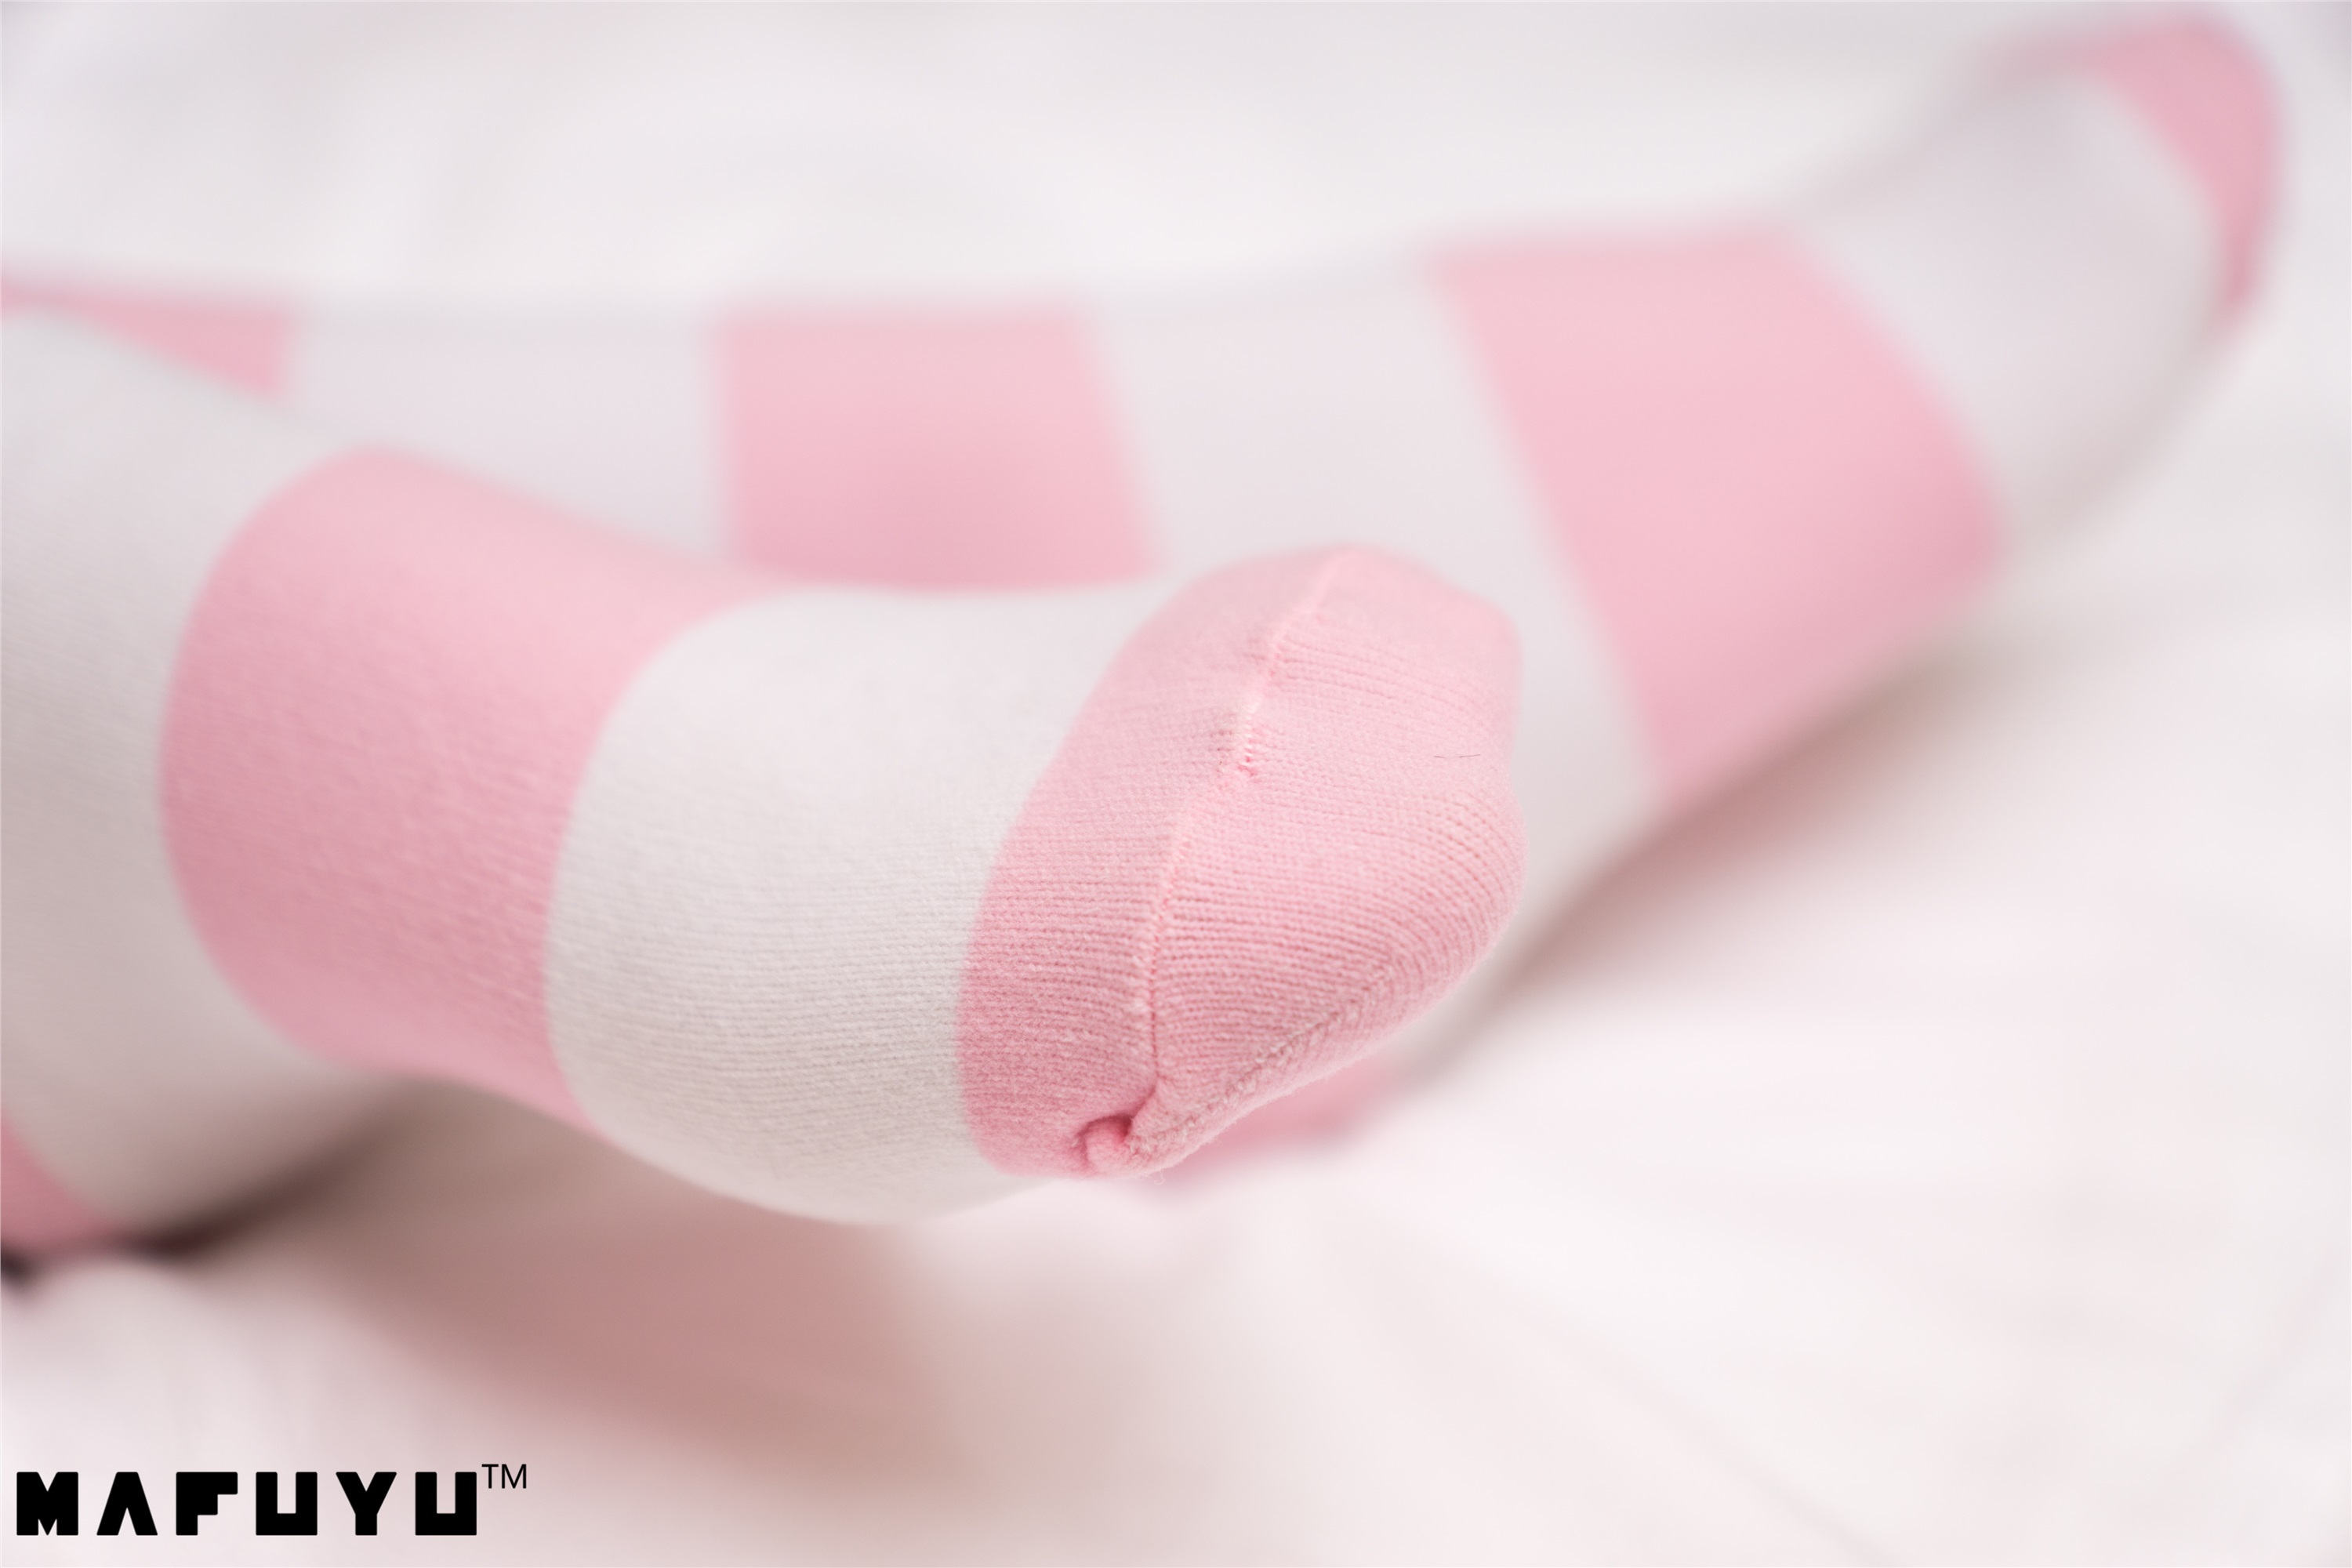 Shenle banzhen winter series - pink and white stripe series